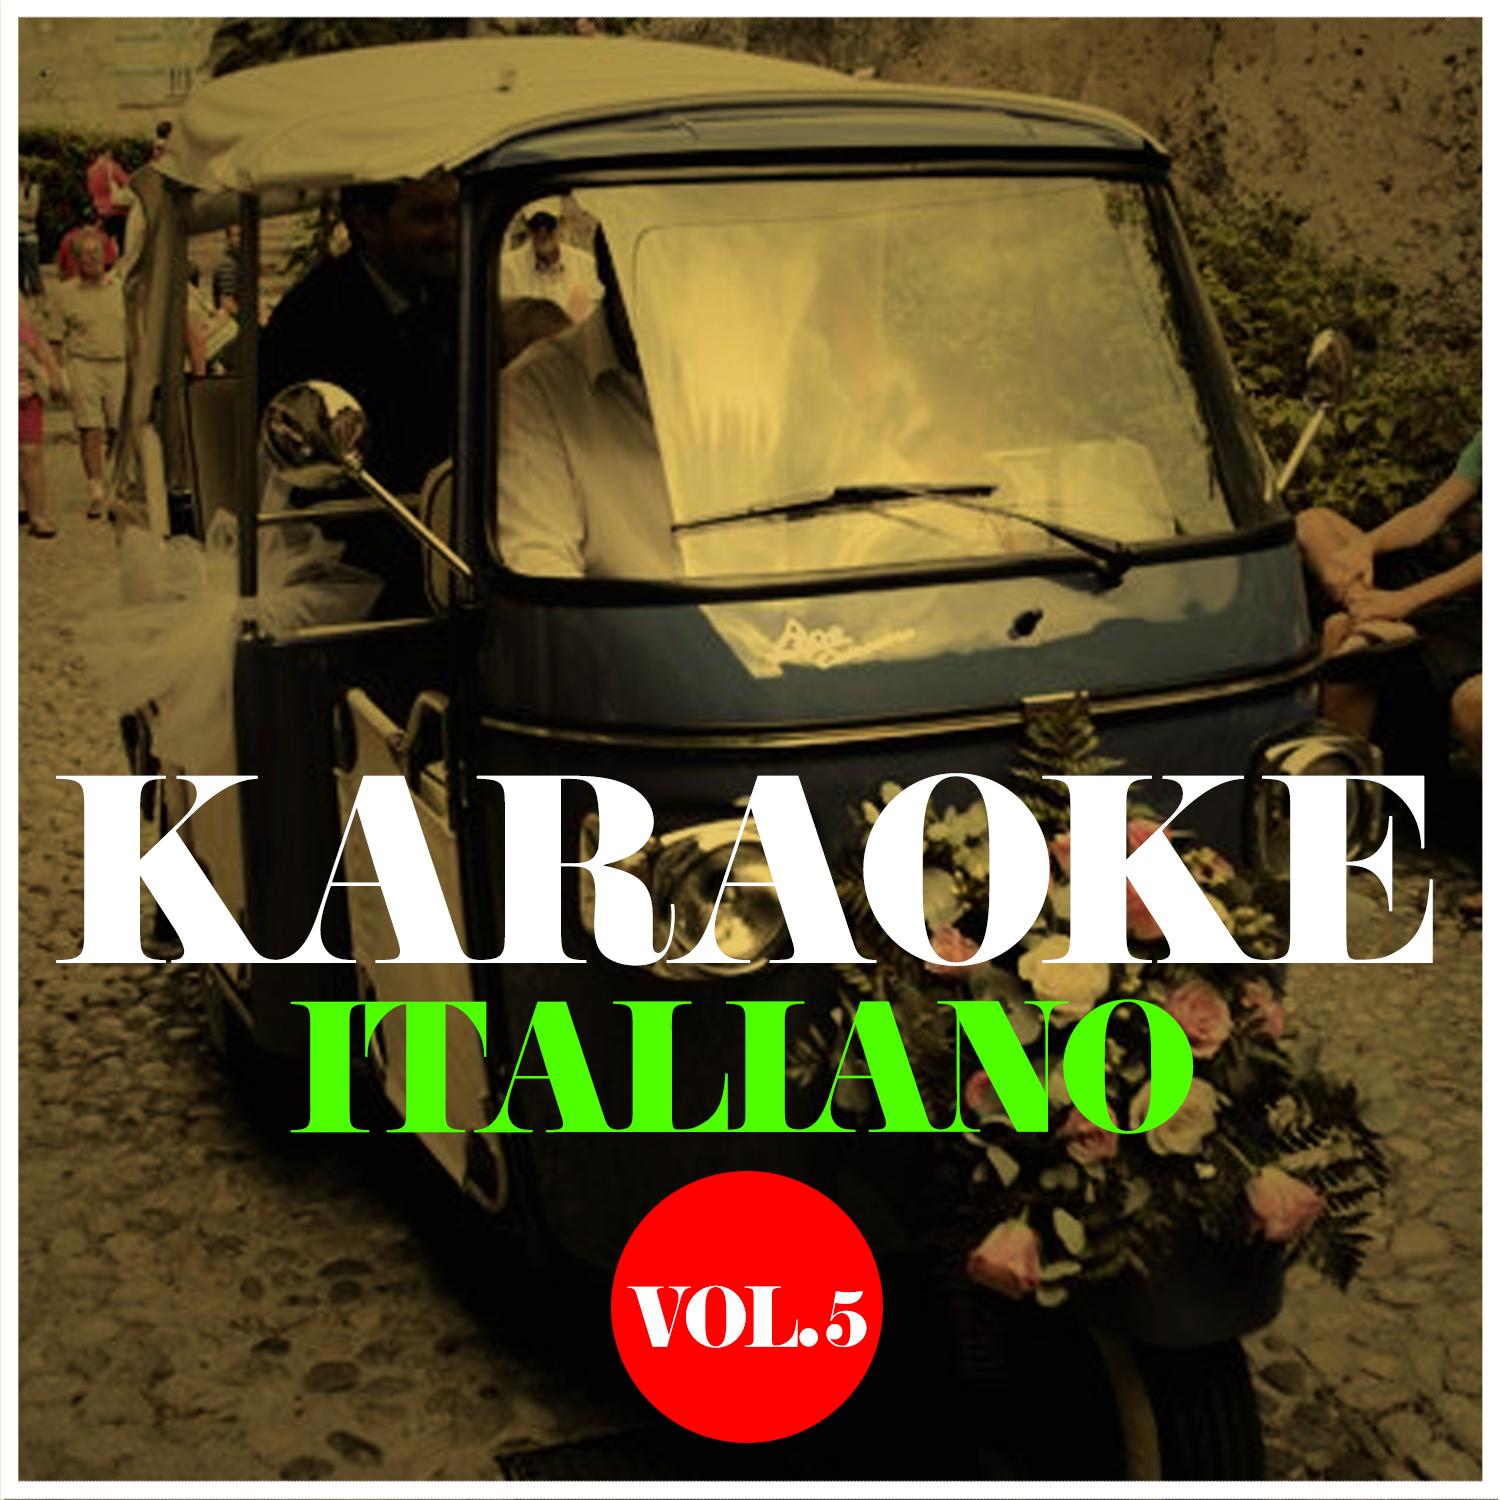 Karaoke - Italiano, Vol. 5